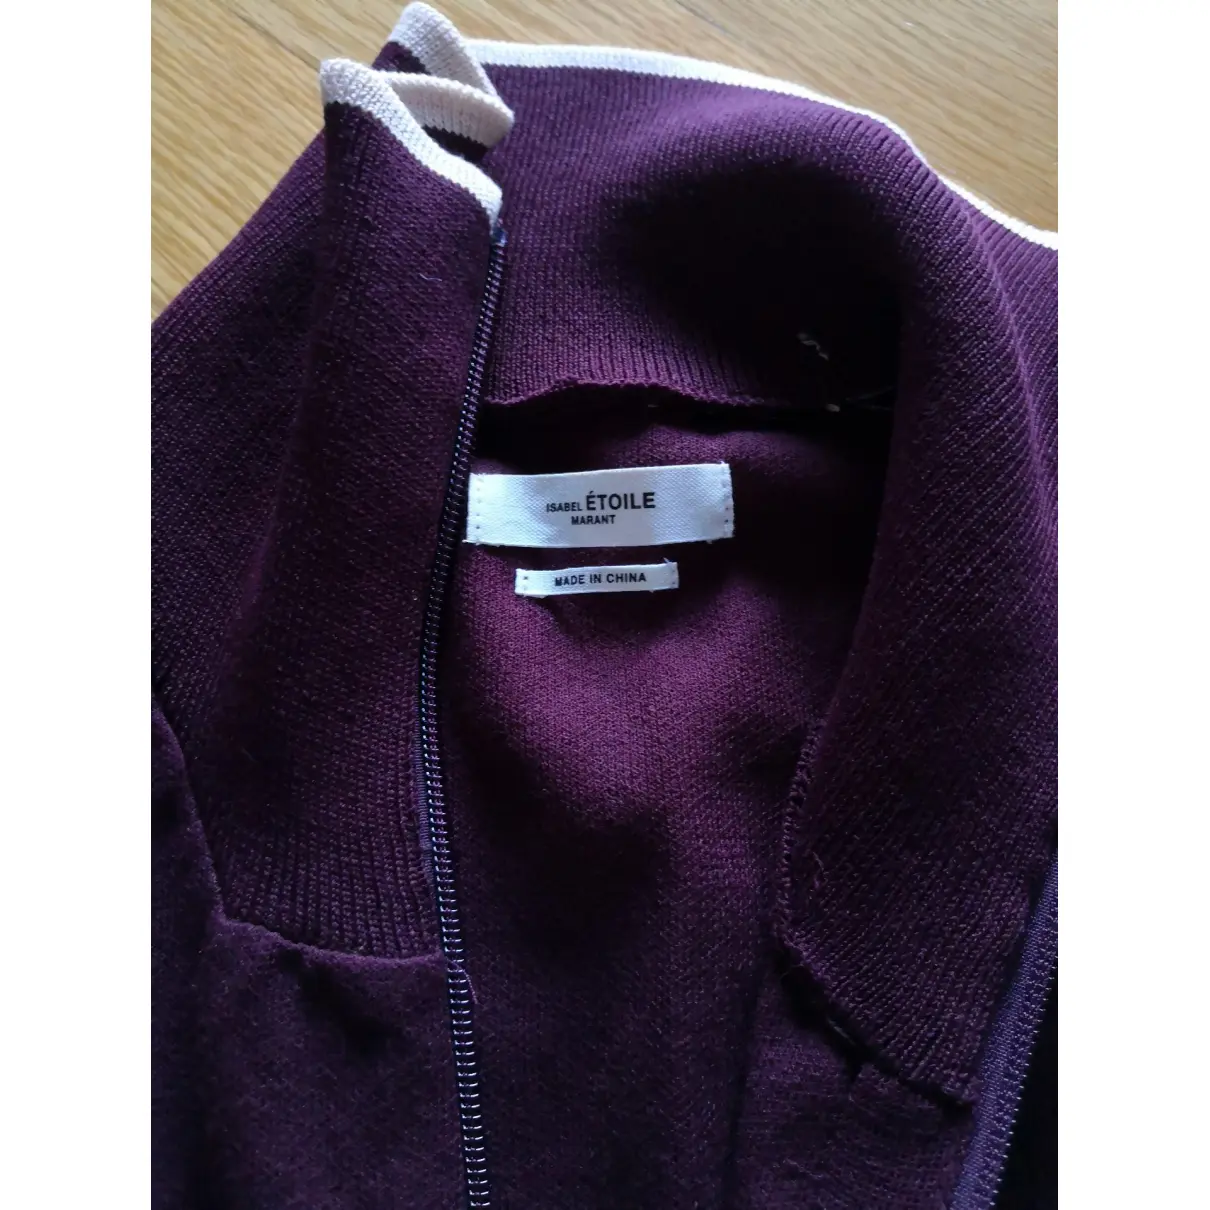 Buy Isabel Marant Etoile Burgundy Viscose Knitwear online